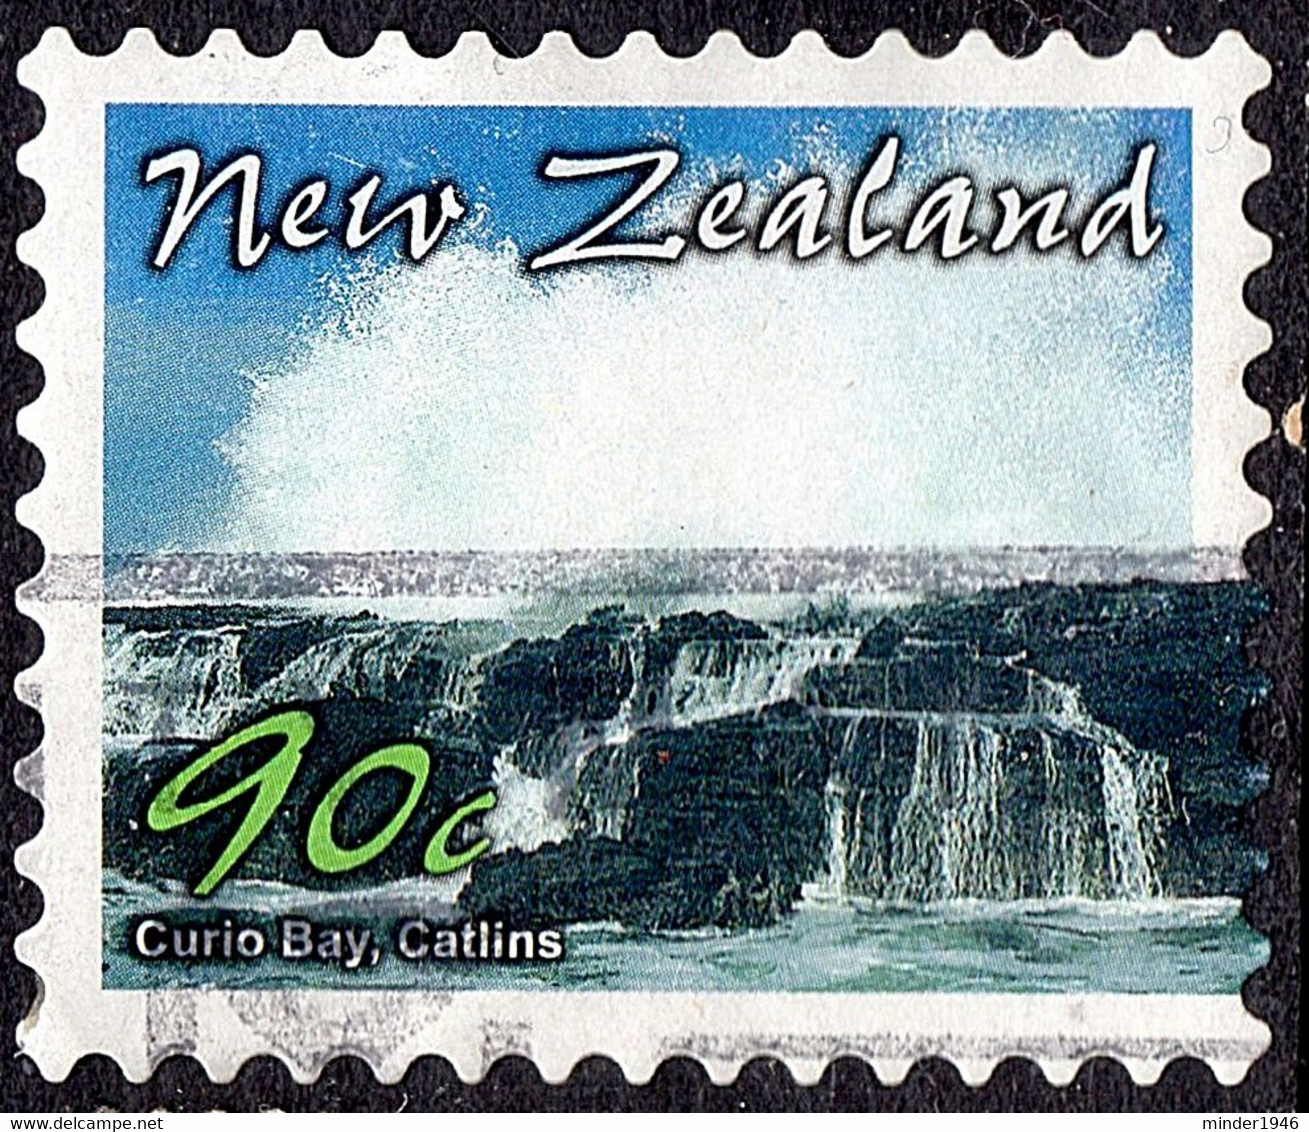 NEW ZEALAND 2002 QEII 90c Multicoloured, Scenery-Curio Bay Catlins SG2517 FU - Gebraucht